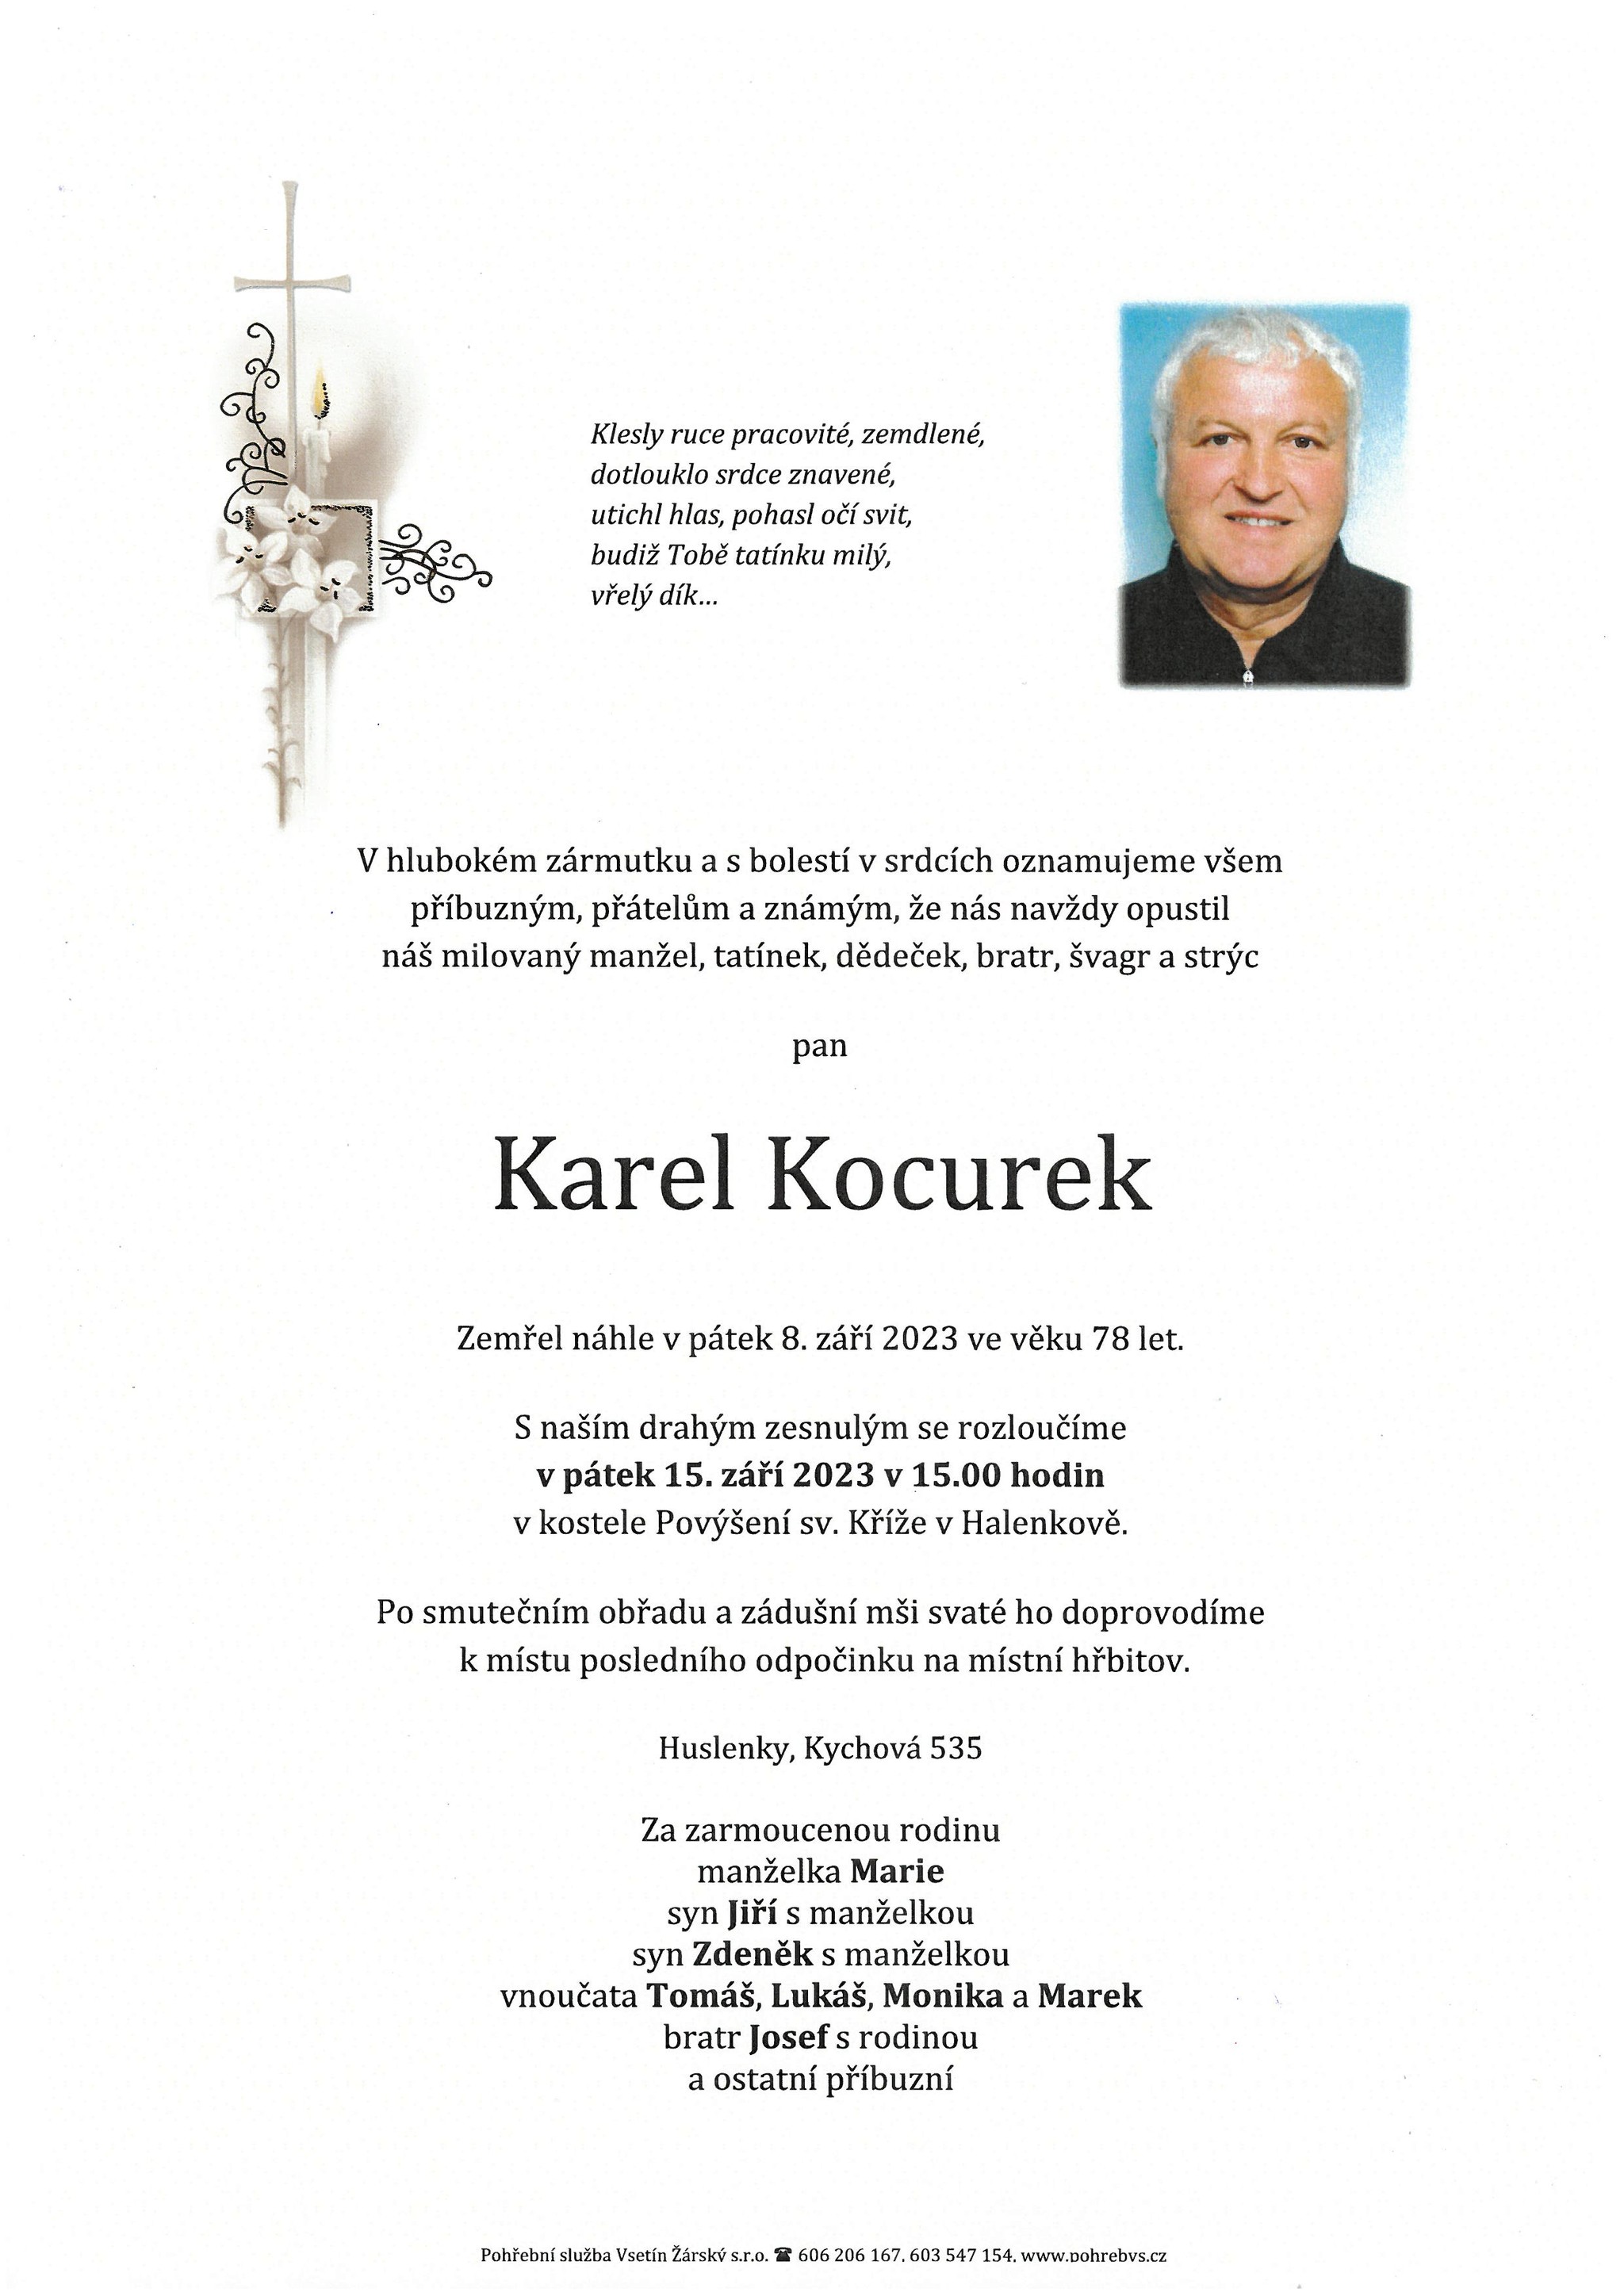 Karel Kocurek